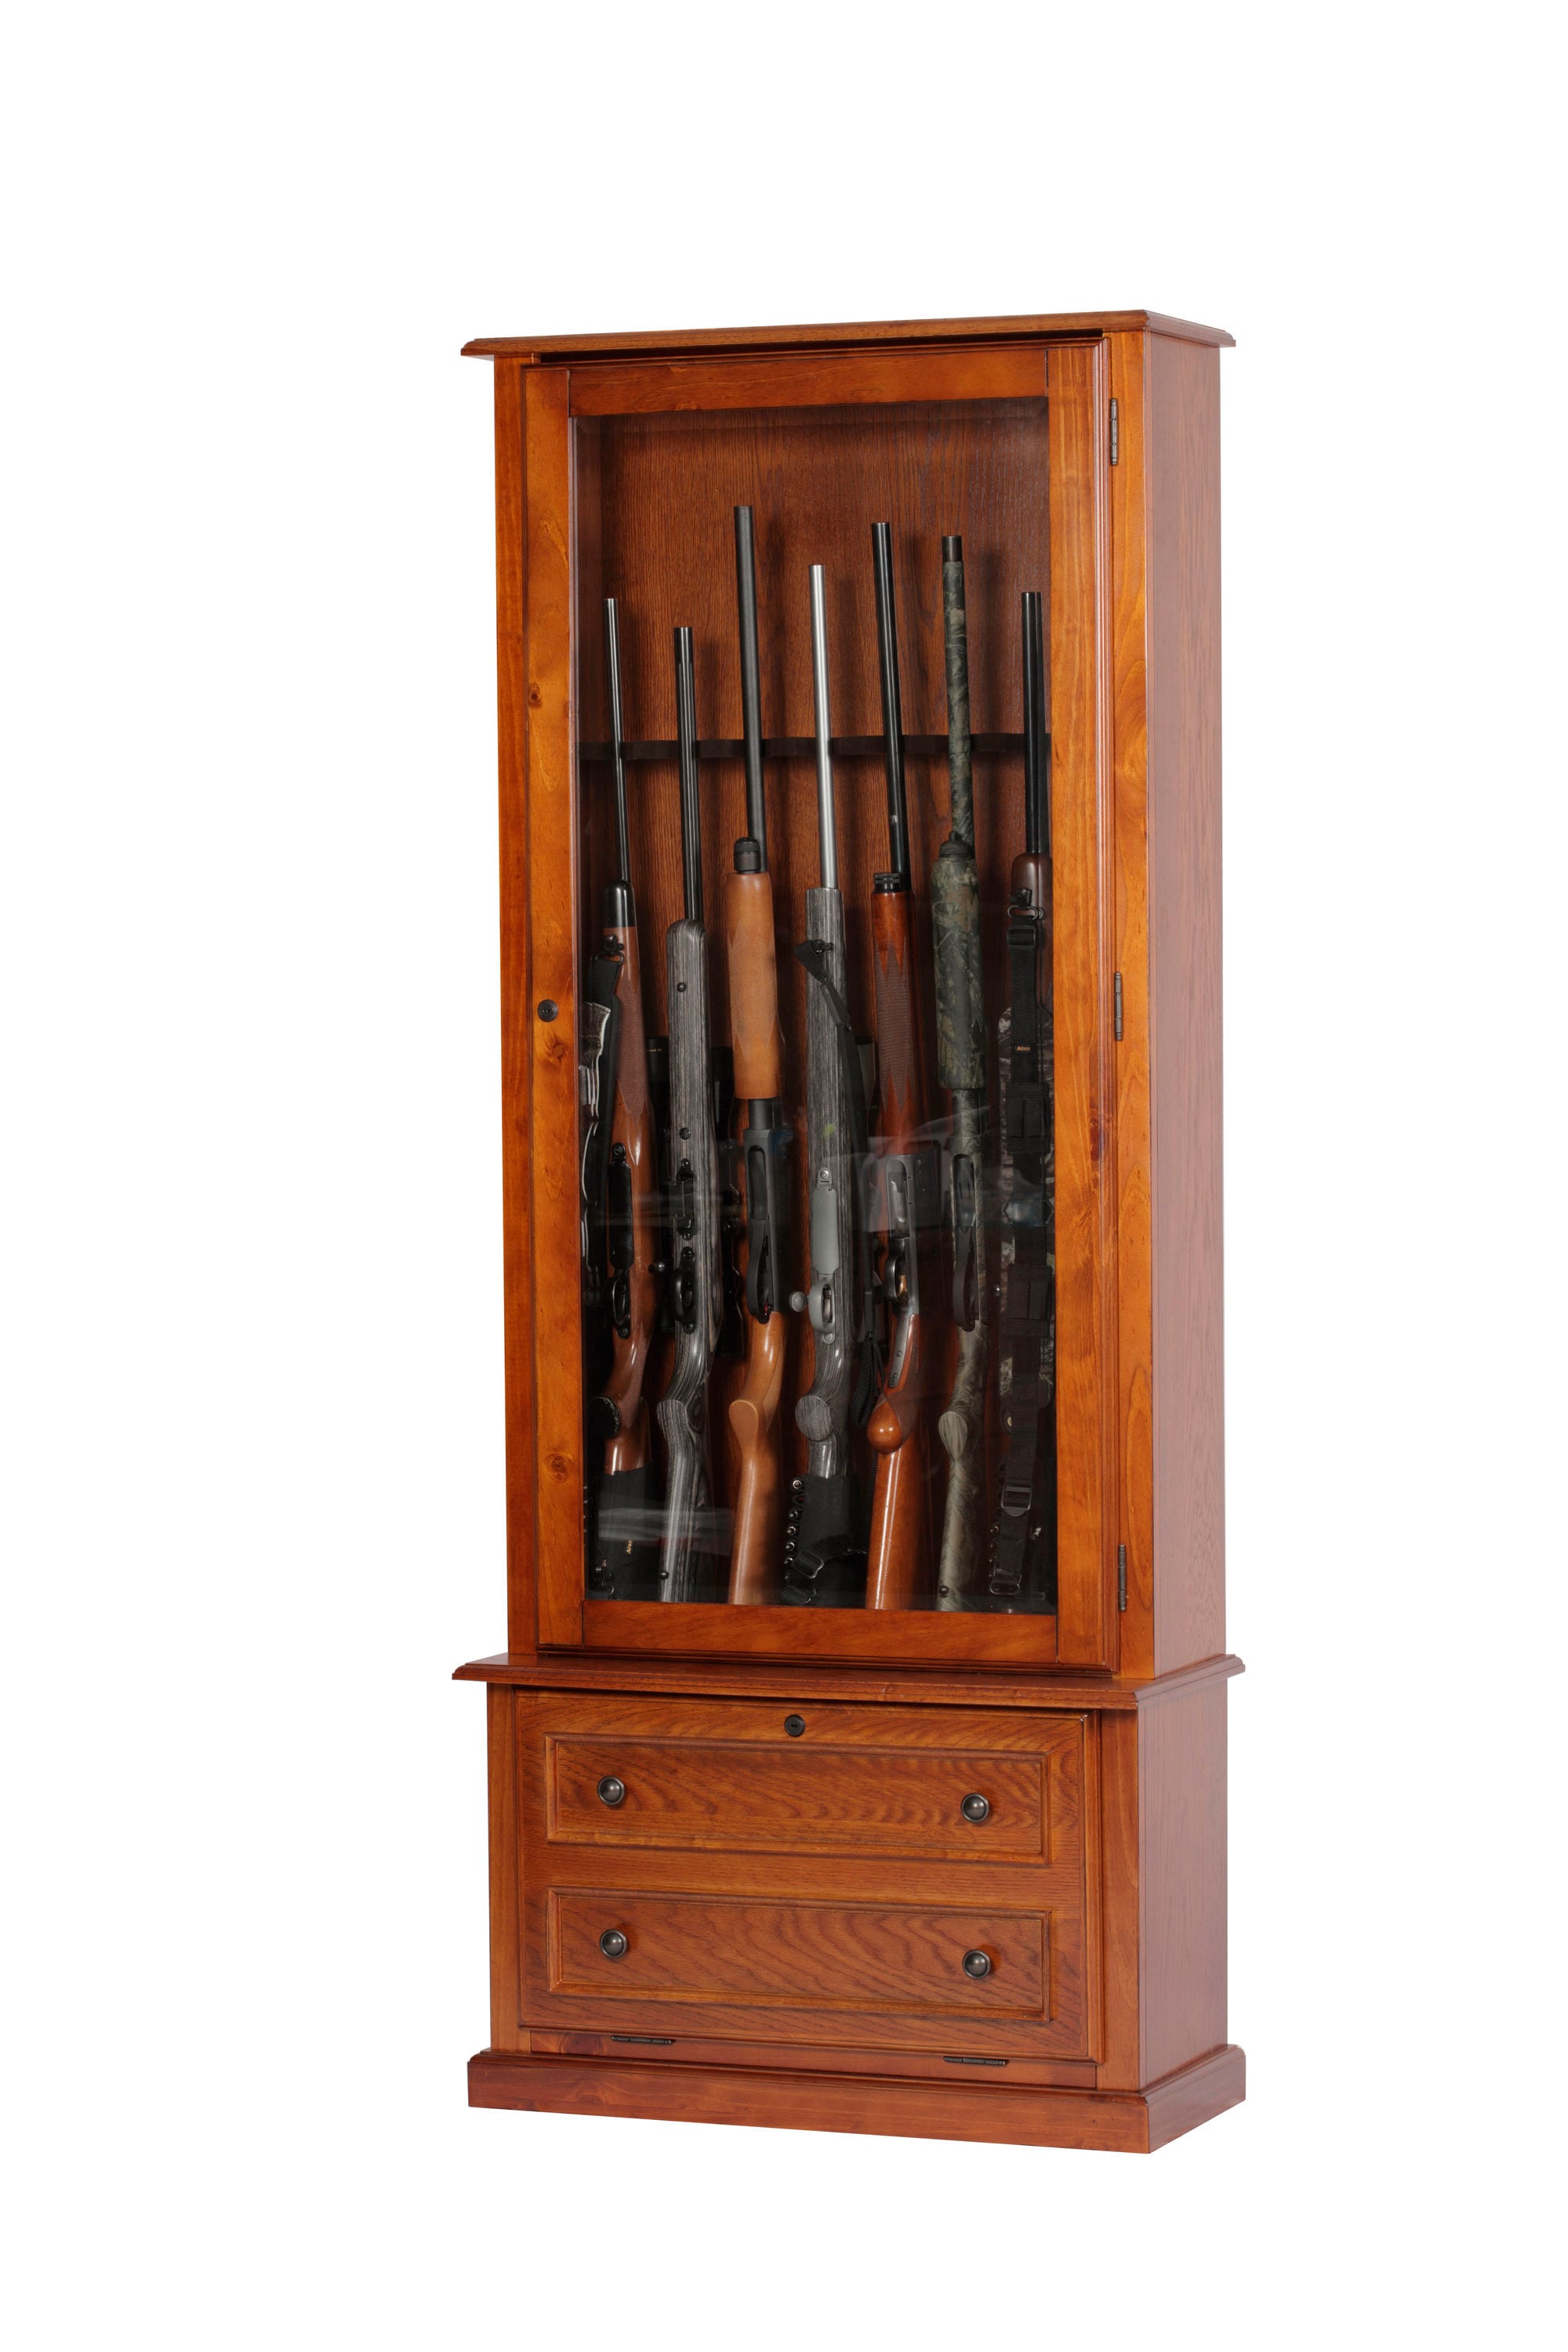 Natural Finish Oak Wooden Gun Stand Display for Rifle Shotgun Lever or Double Barrels